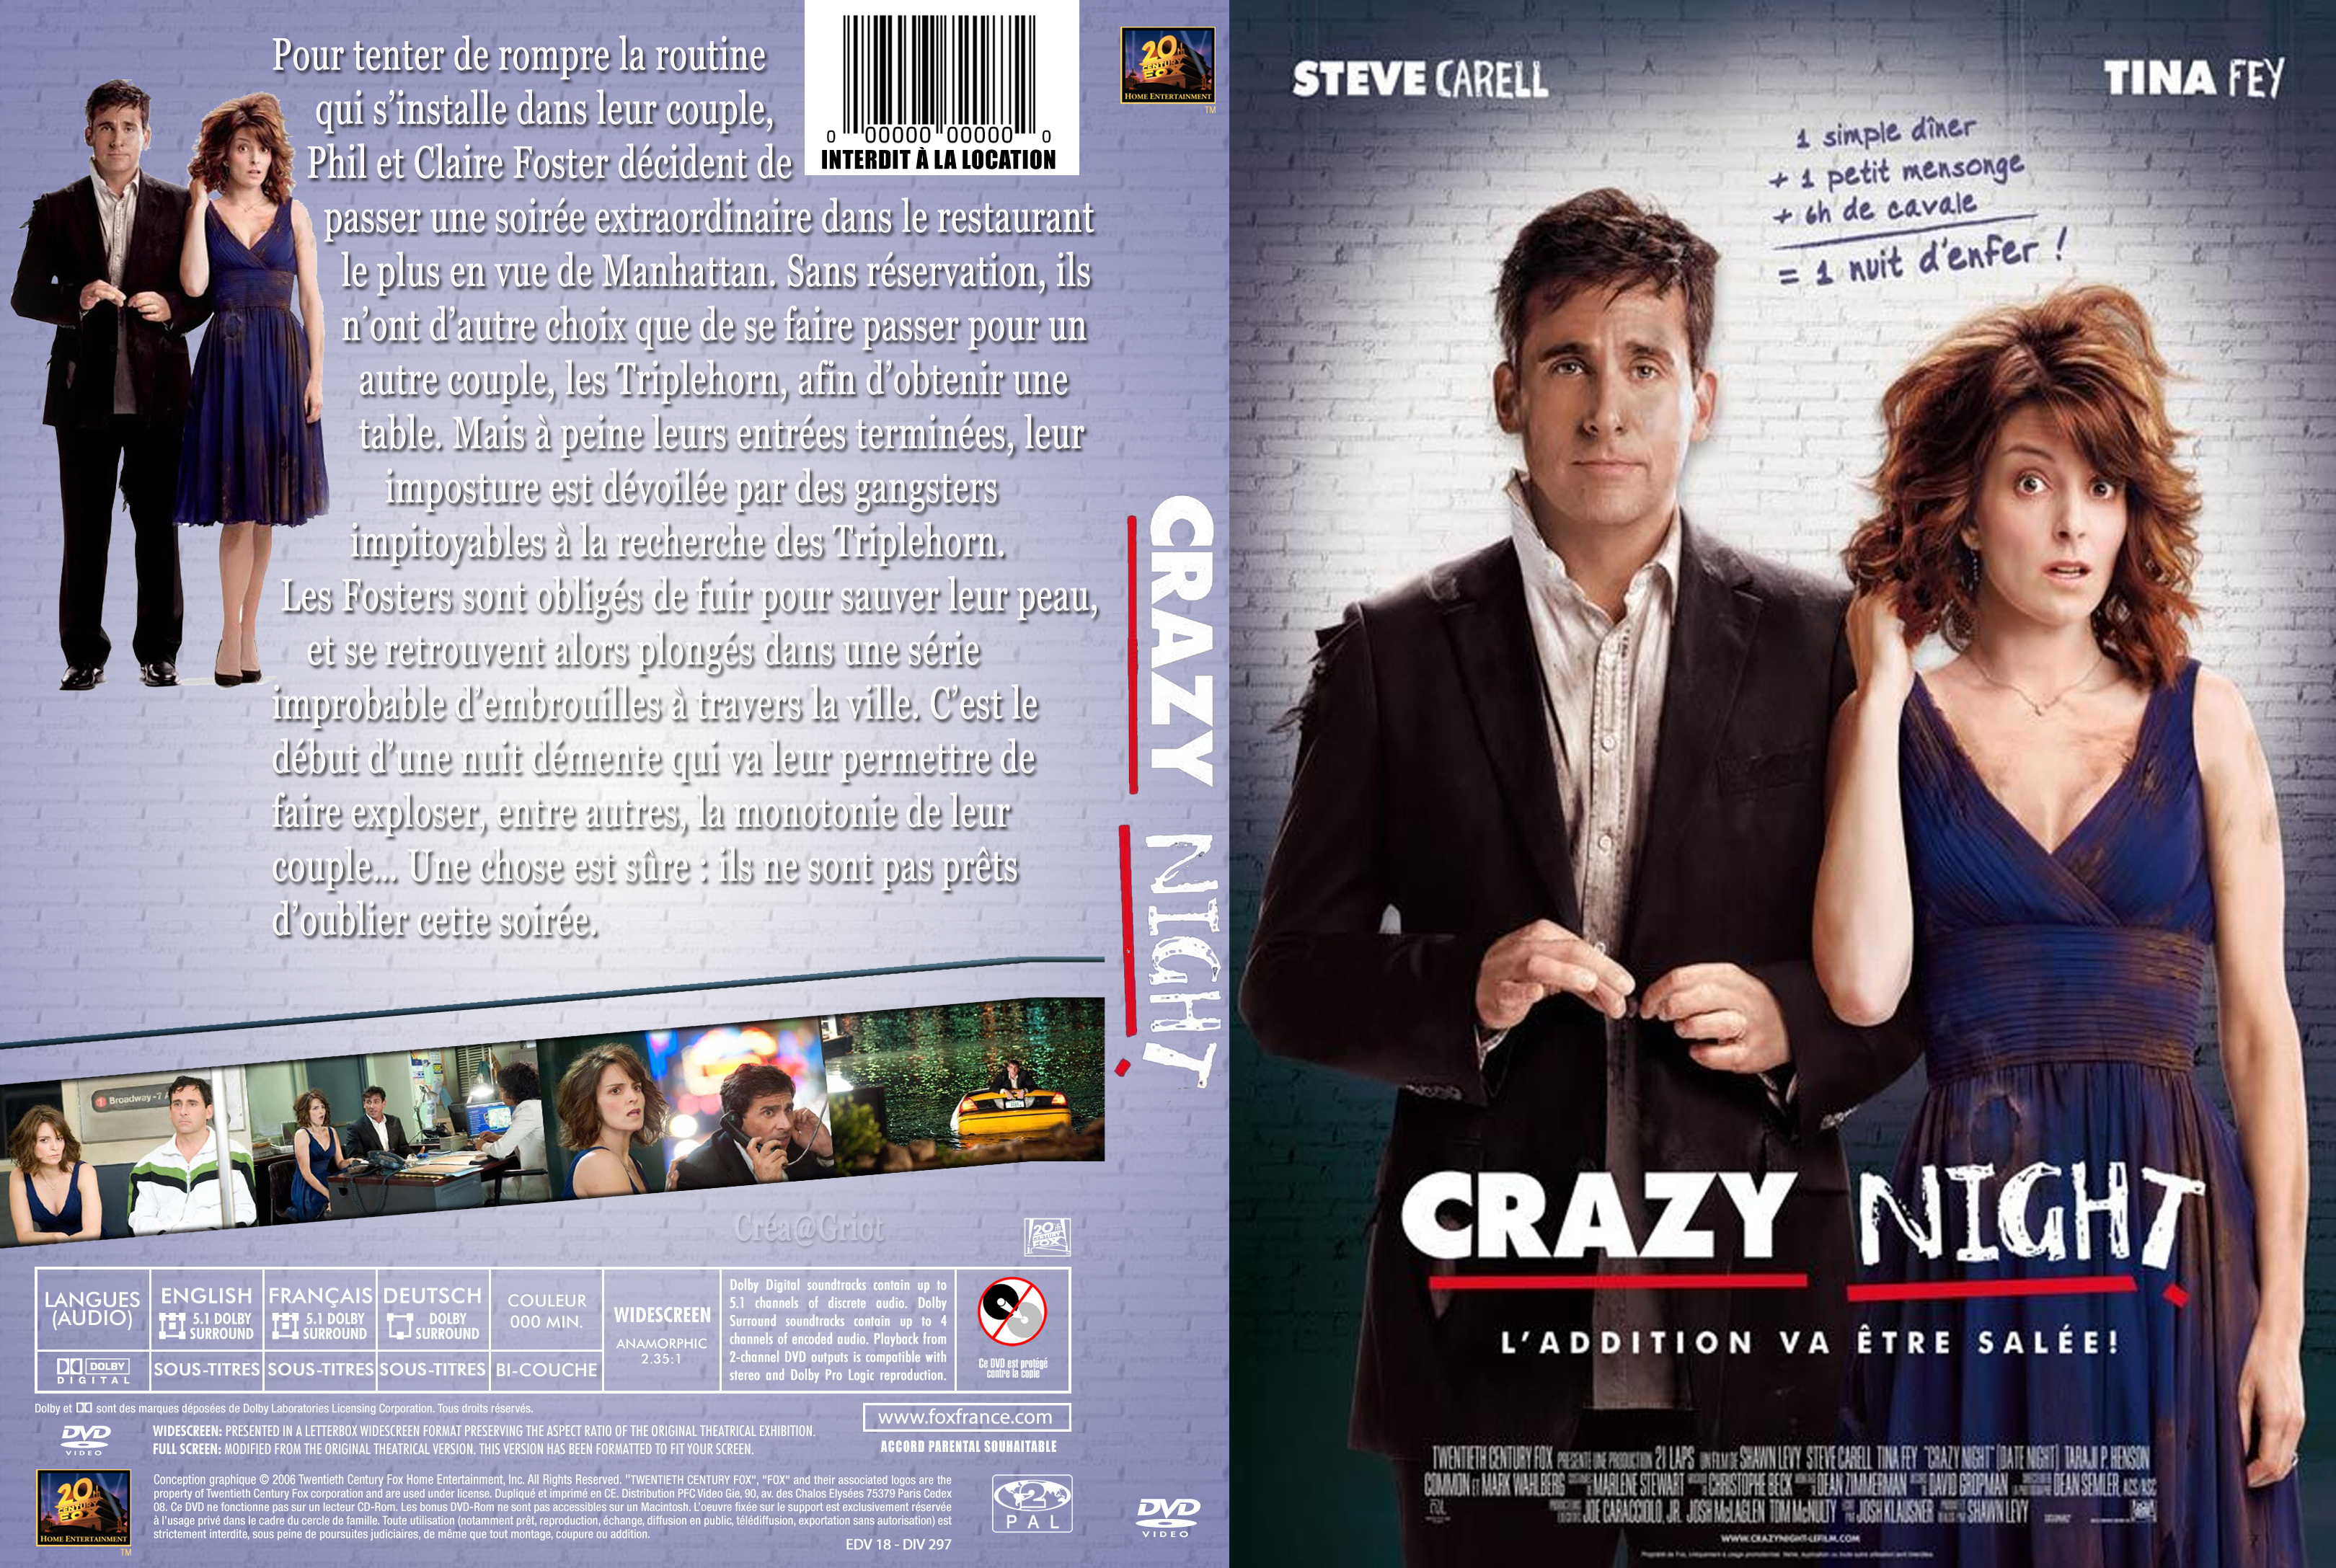 Jaquette DVD Crazy night custom